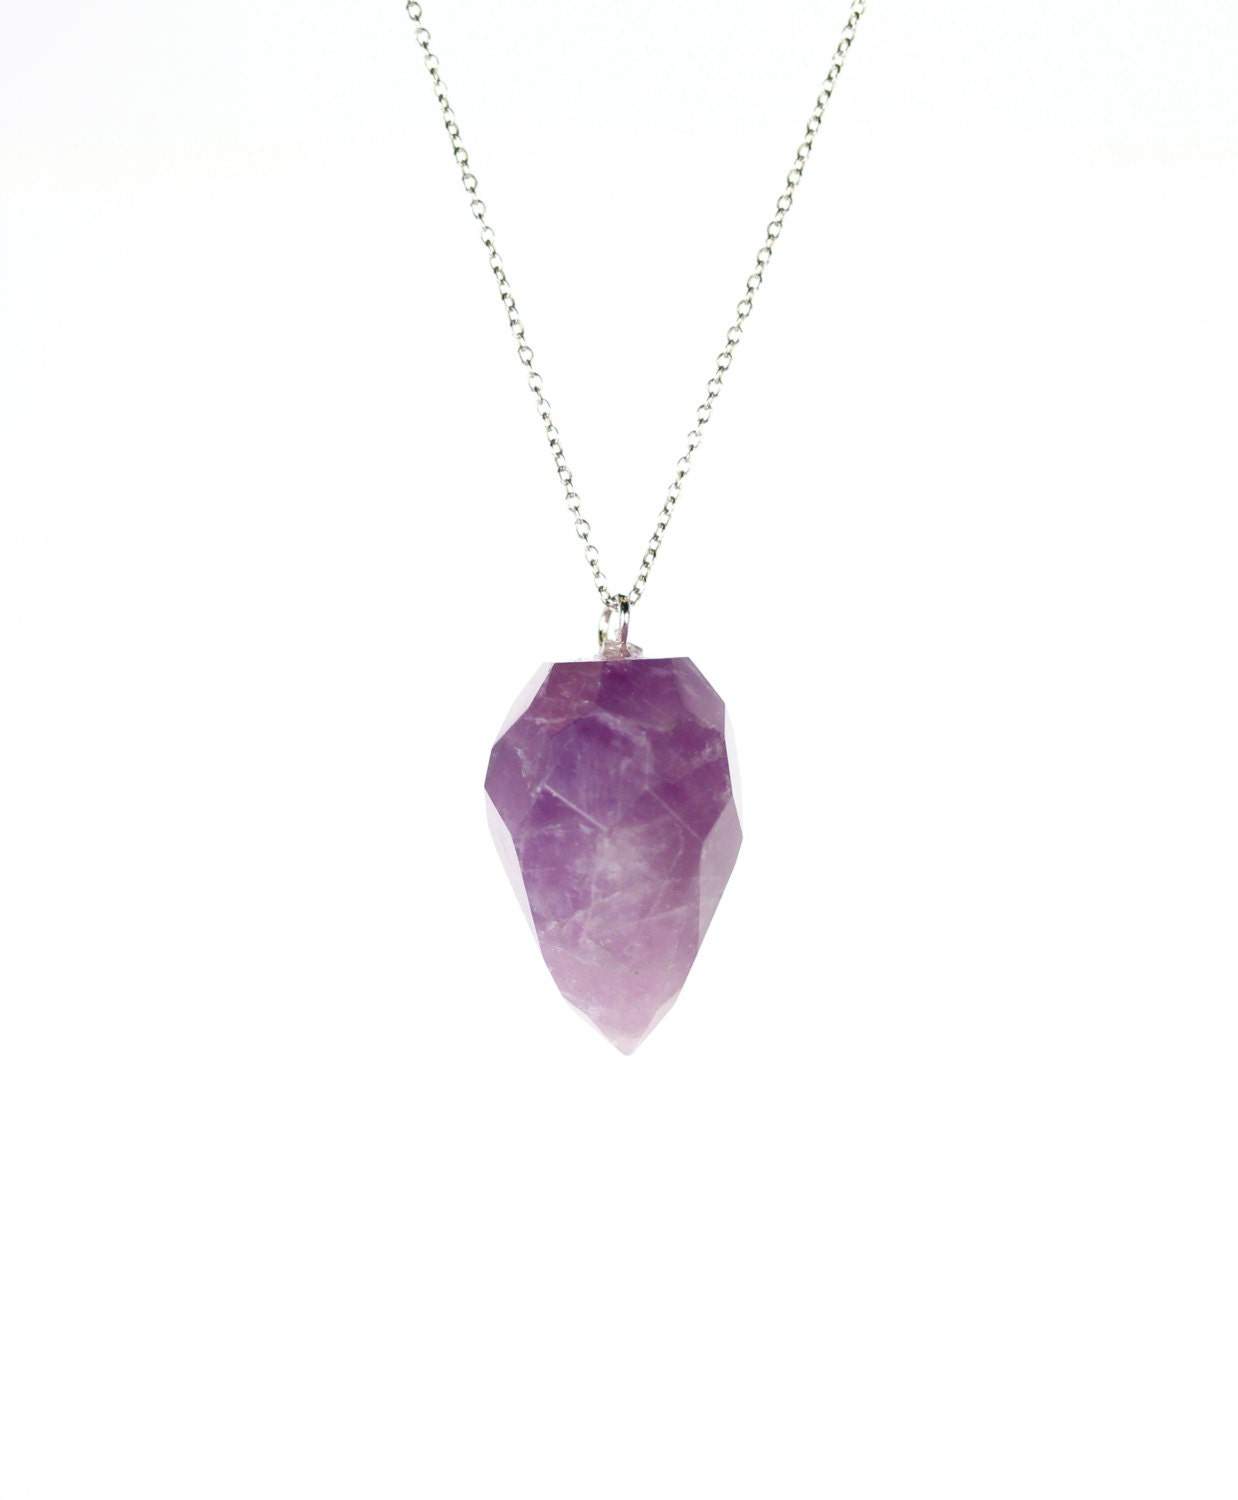 Amethyst necklace - hypnosis pendulum - crystal necklace - amethyst ...